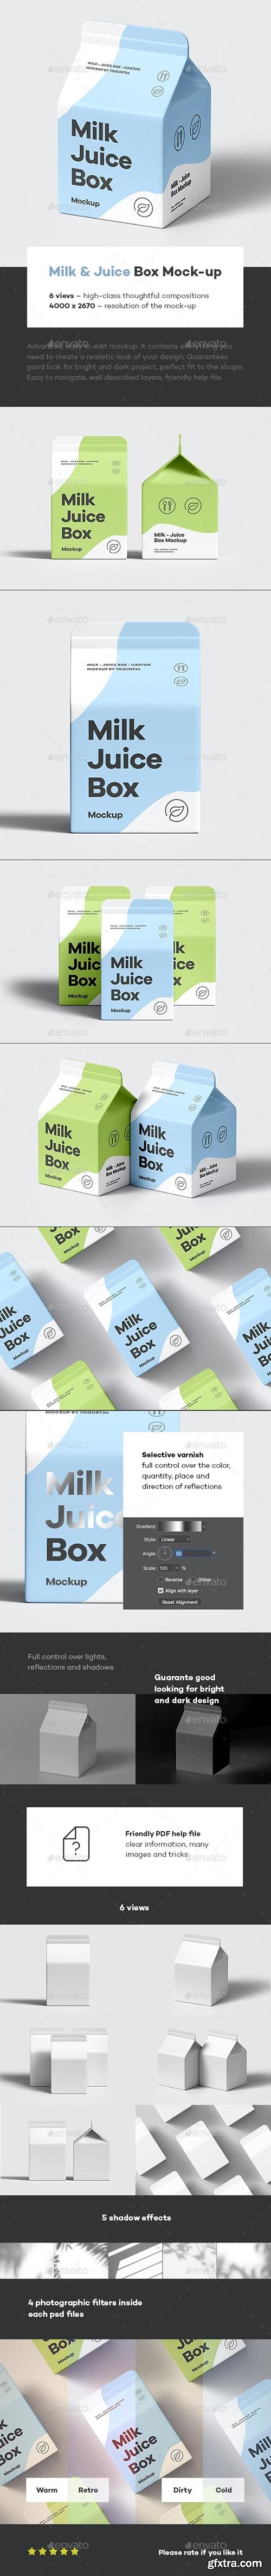 GraphicRiver - Milk Juice Box Mock-up 39926306